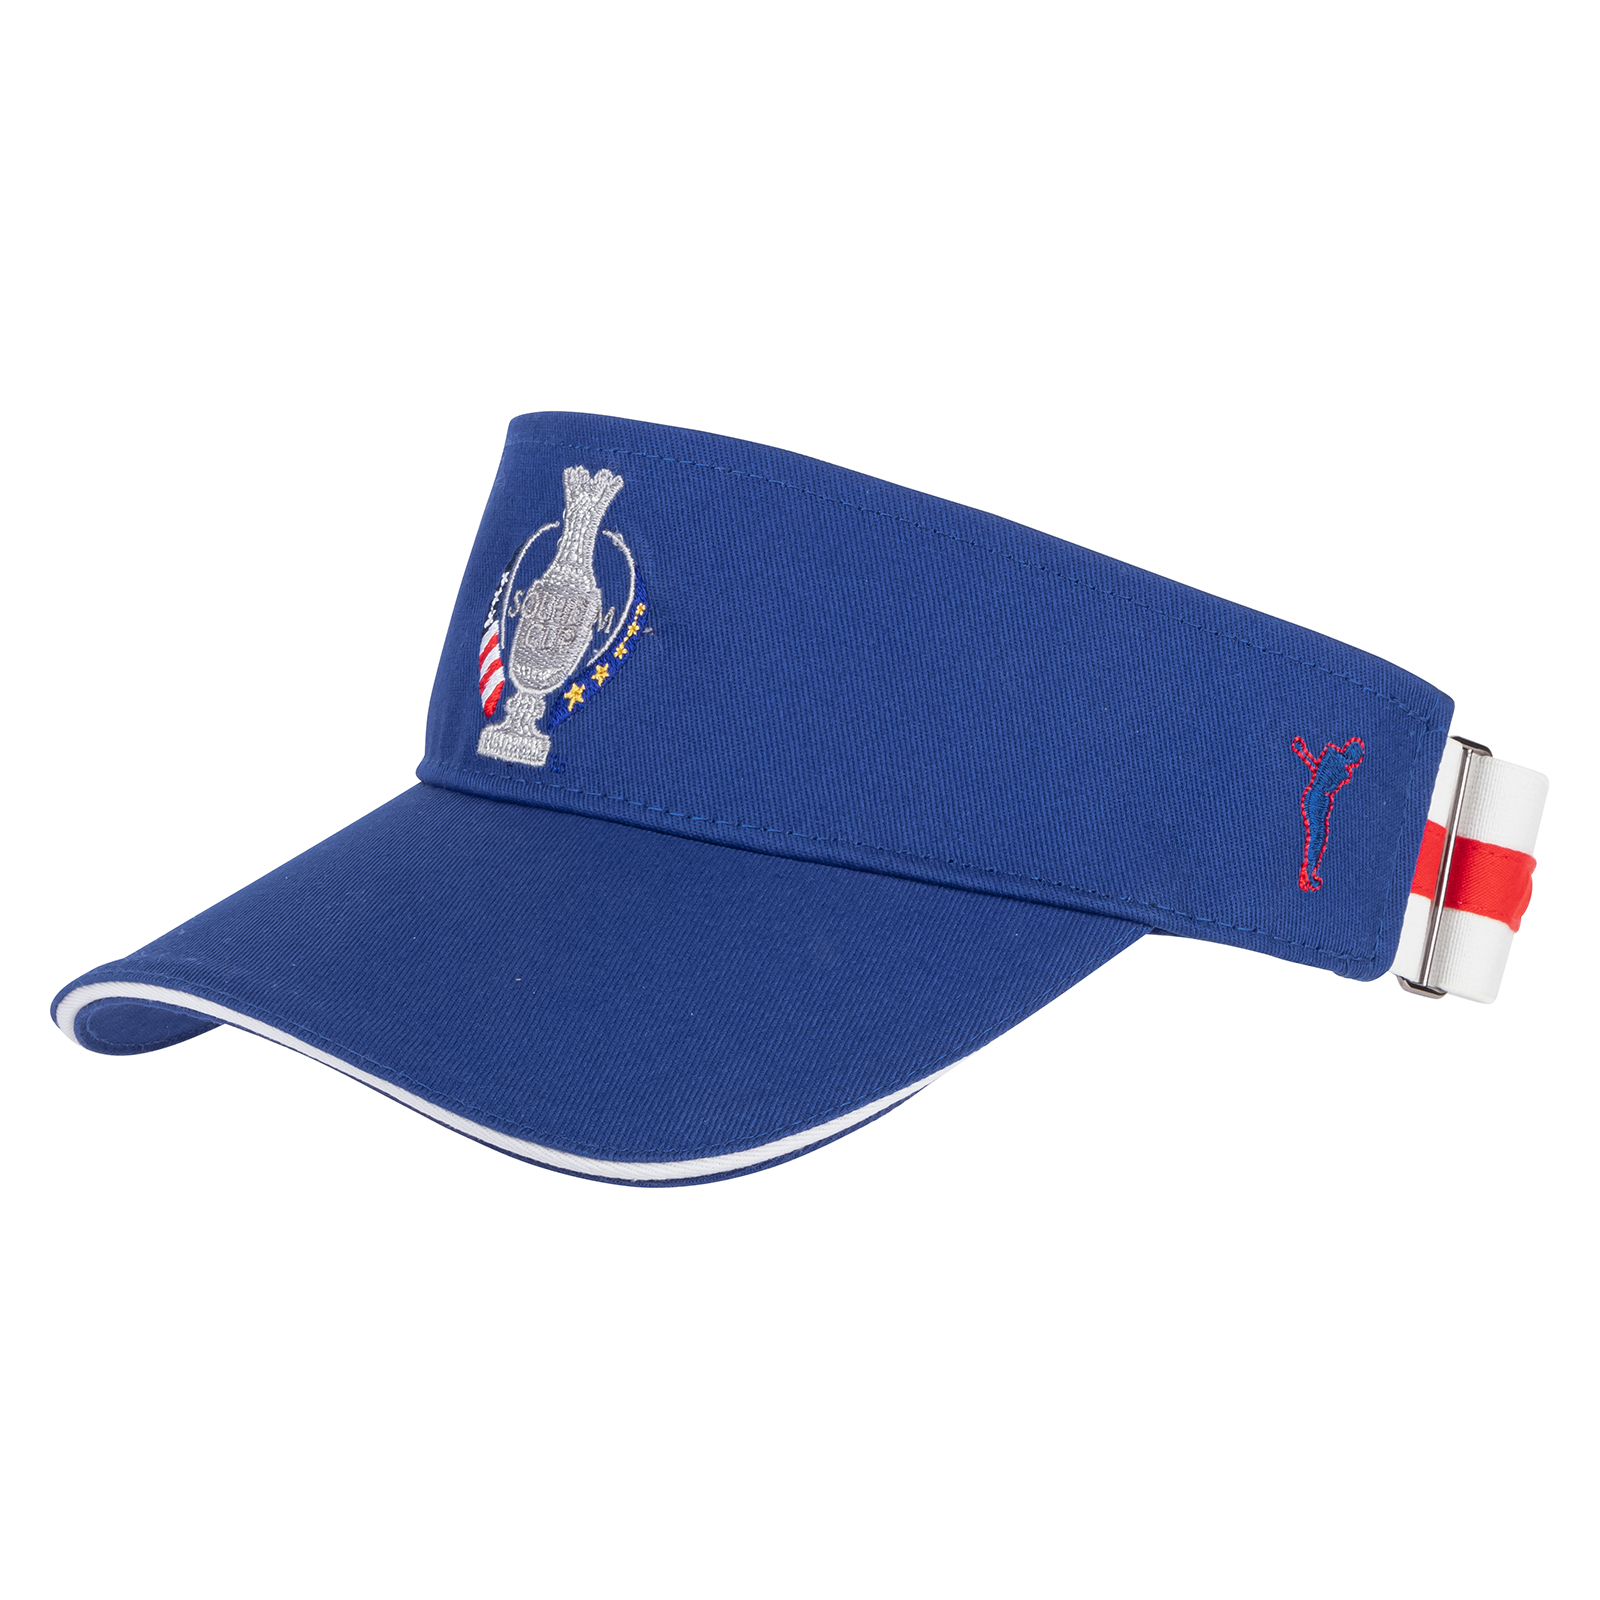 Ladies flexible golf visor in Solheim Cup design 